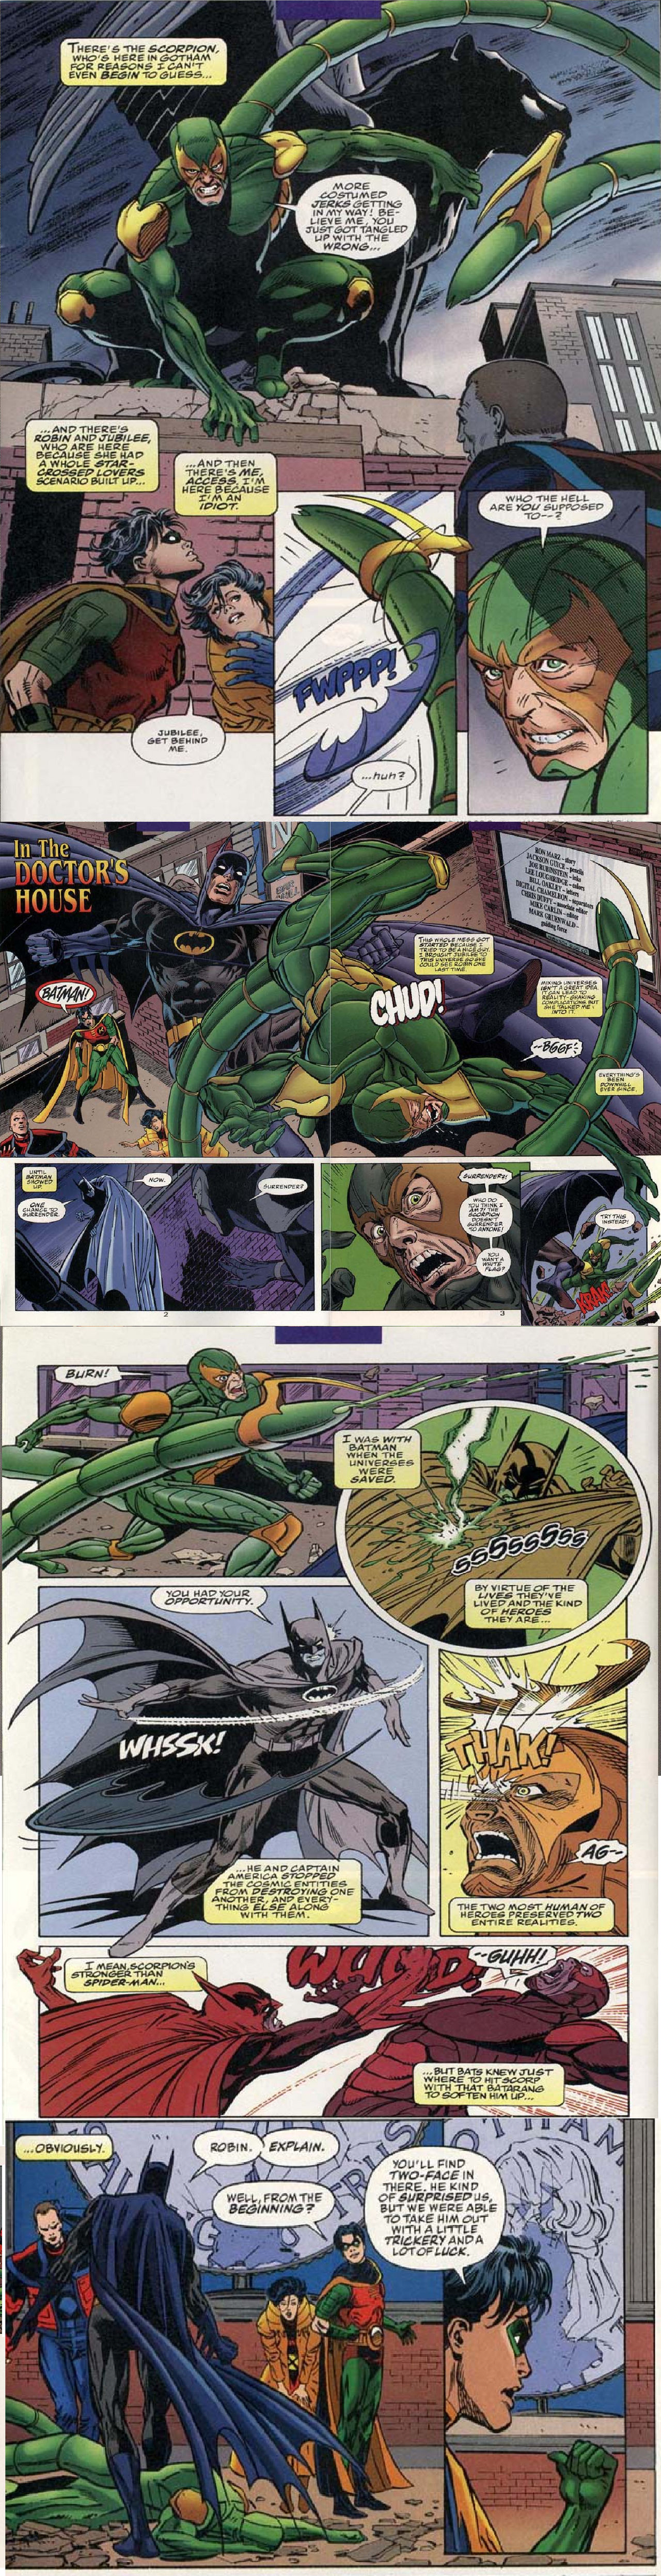 Marvel X DC: Batman Vs Scorpion. by Venom-Rules-all on DeviantArt